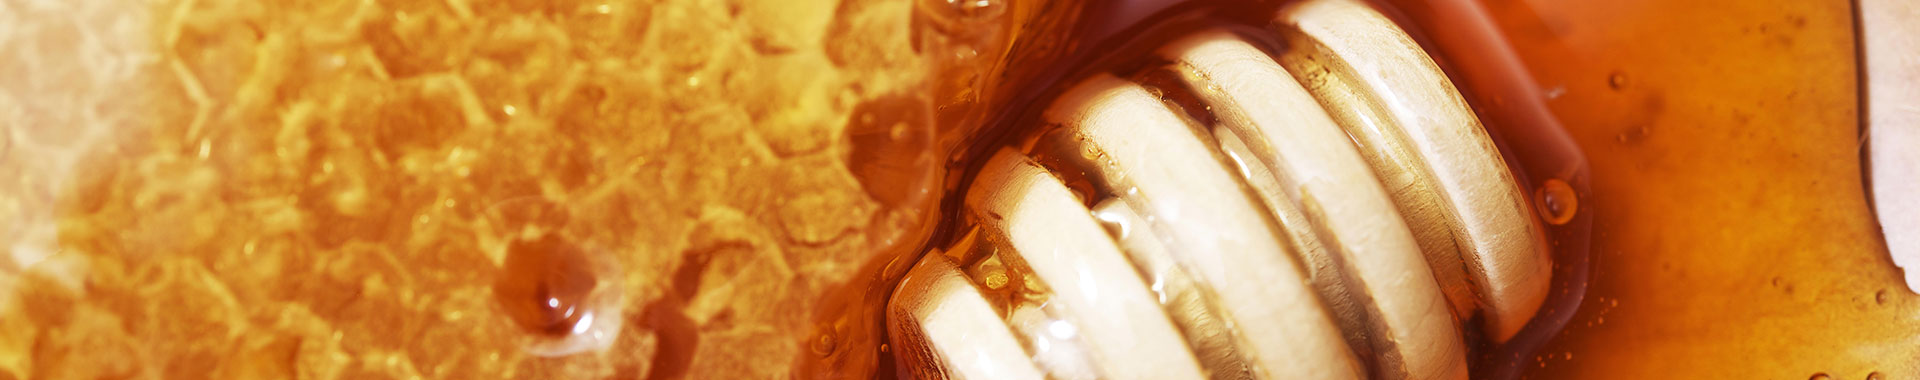 Honiglöffel aus Holz in Honig 